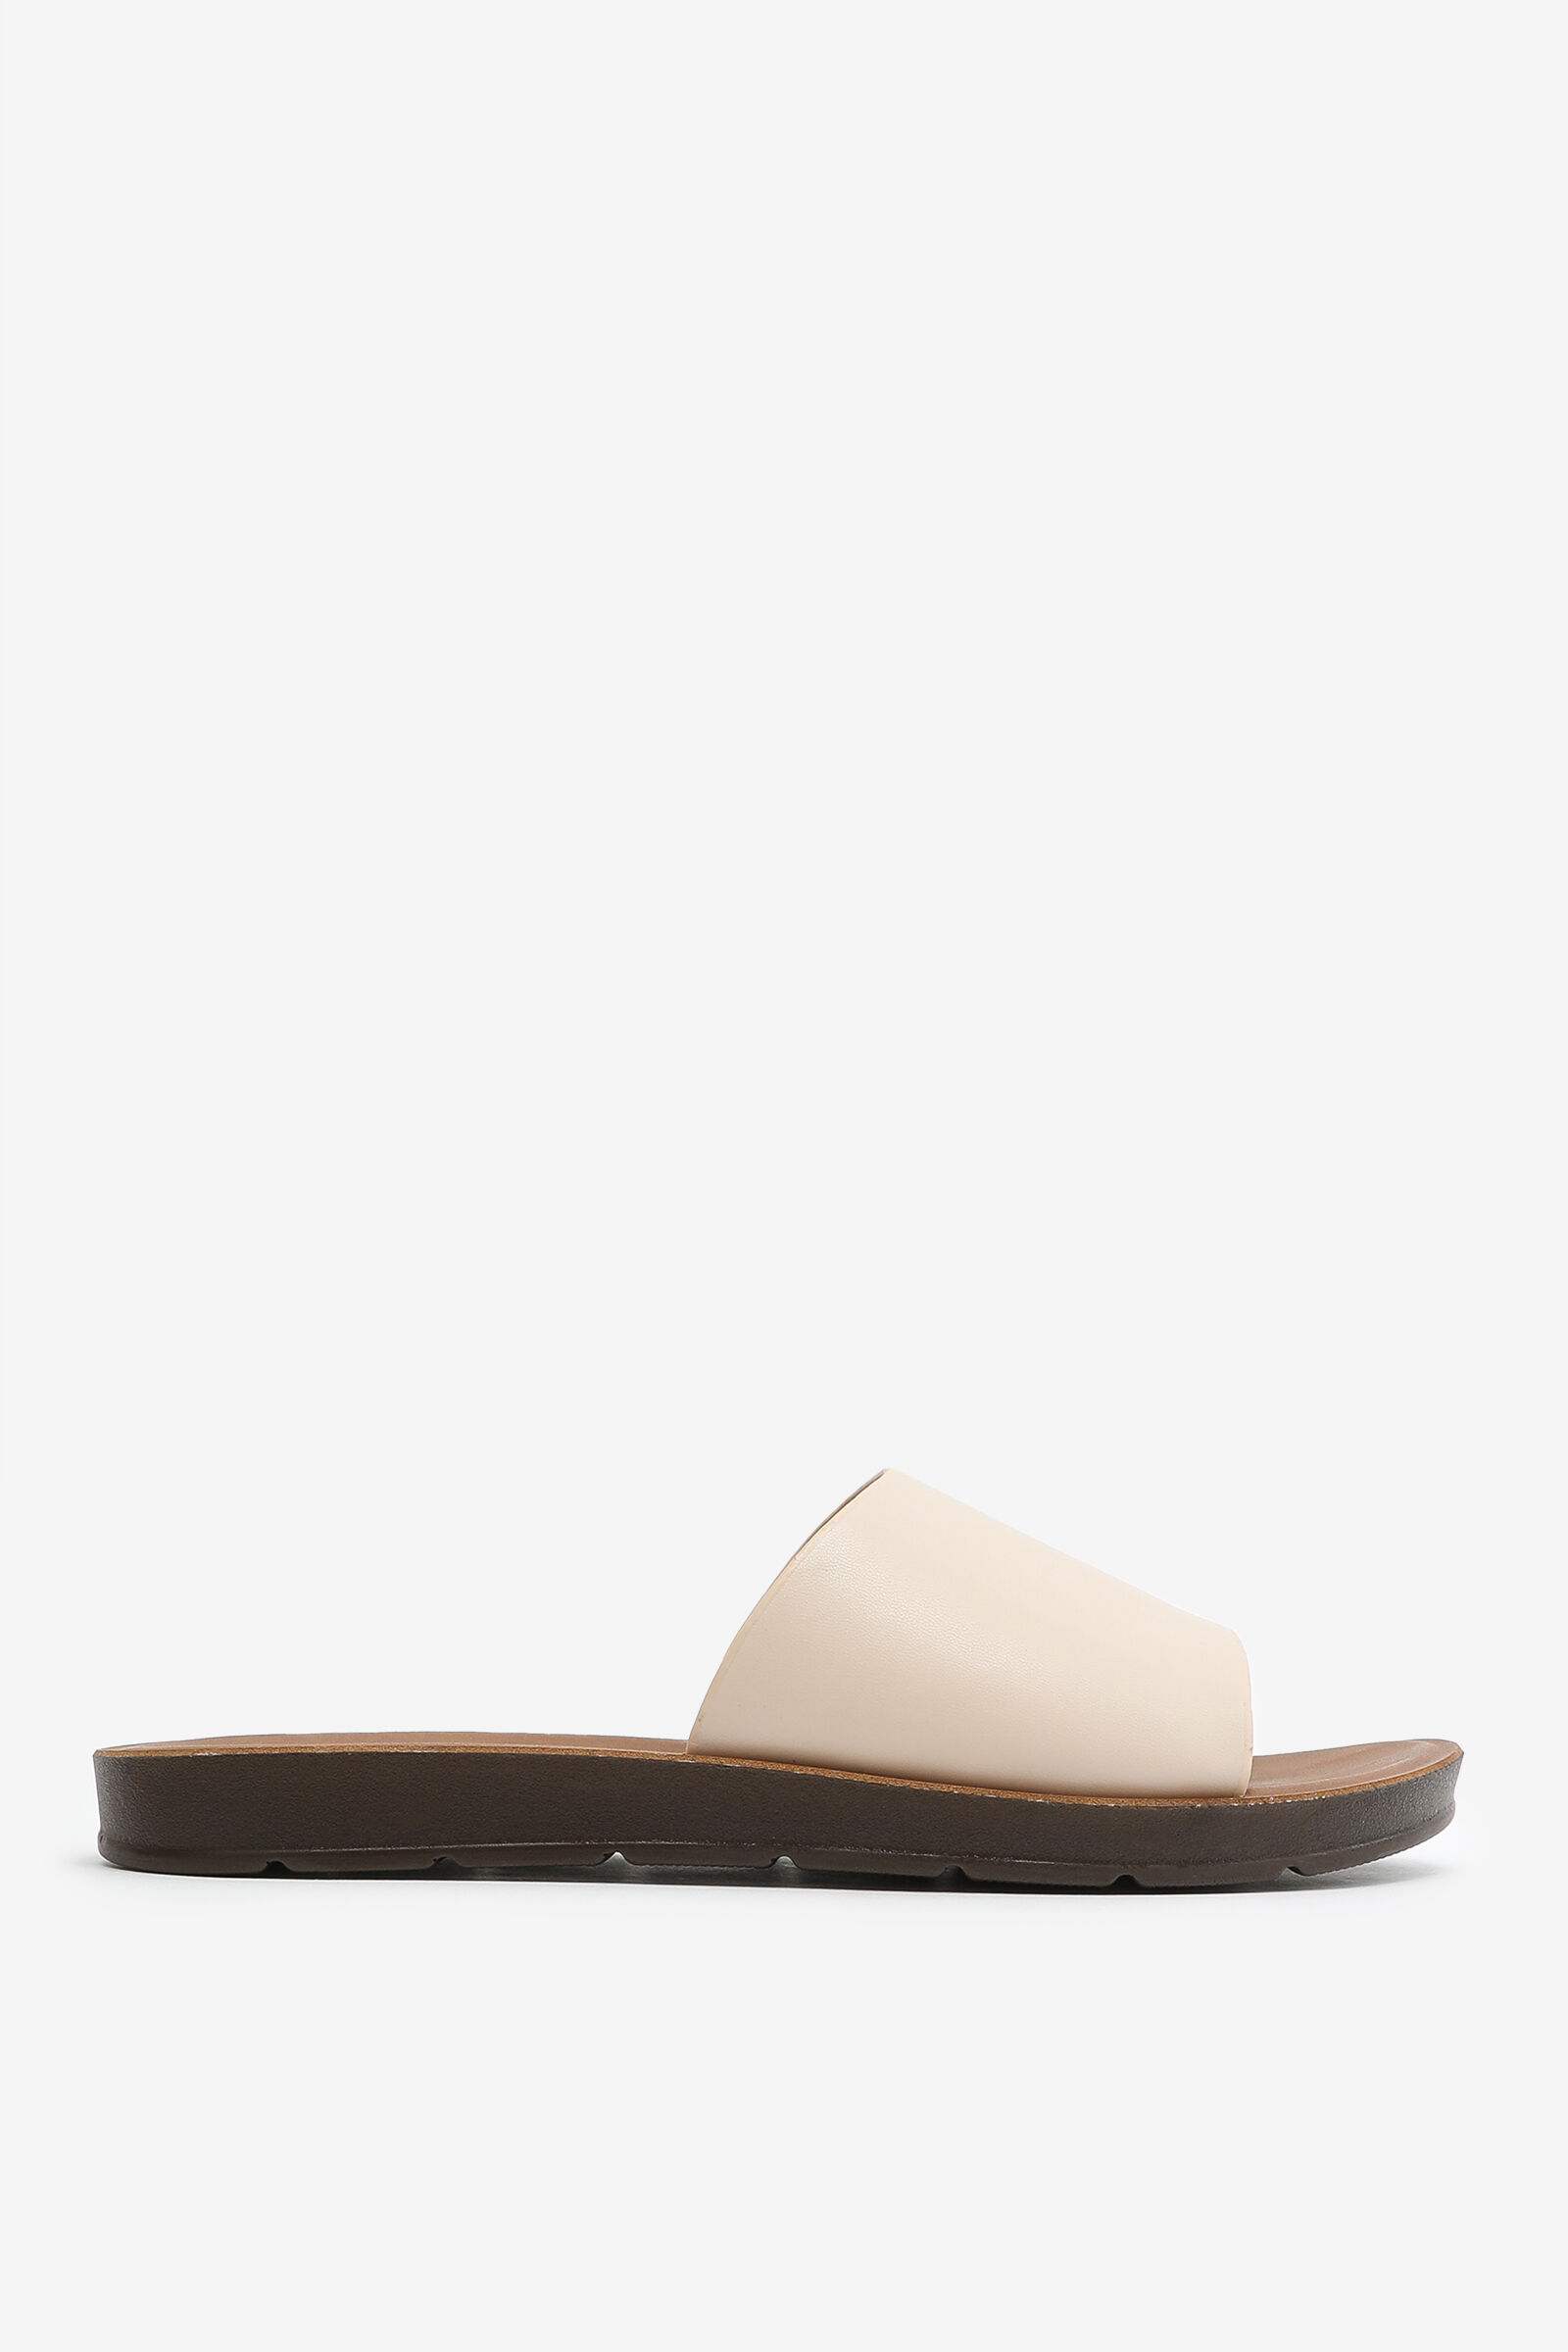 Sandals Flats By Aldo Size: 8.5